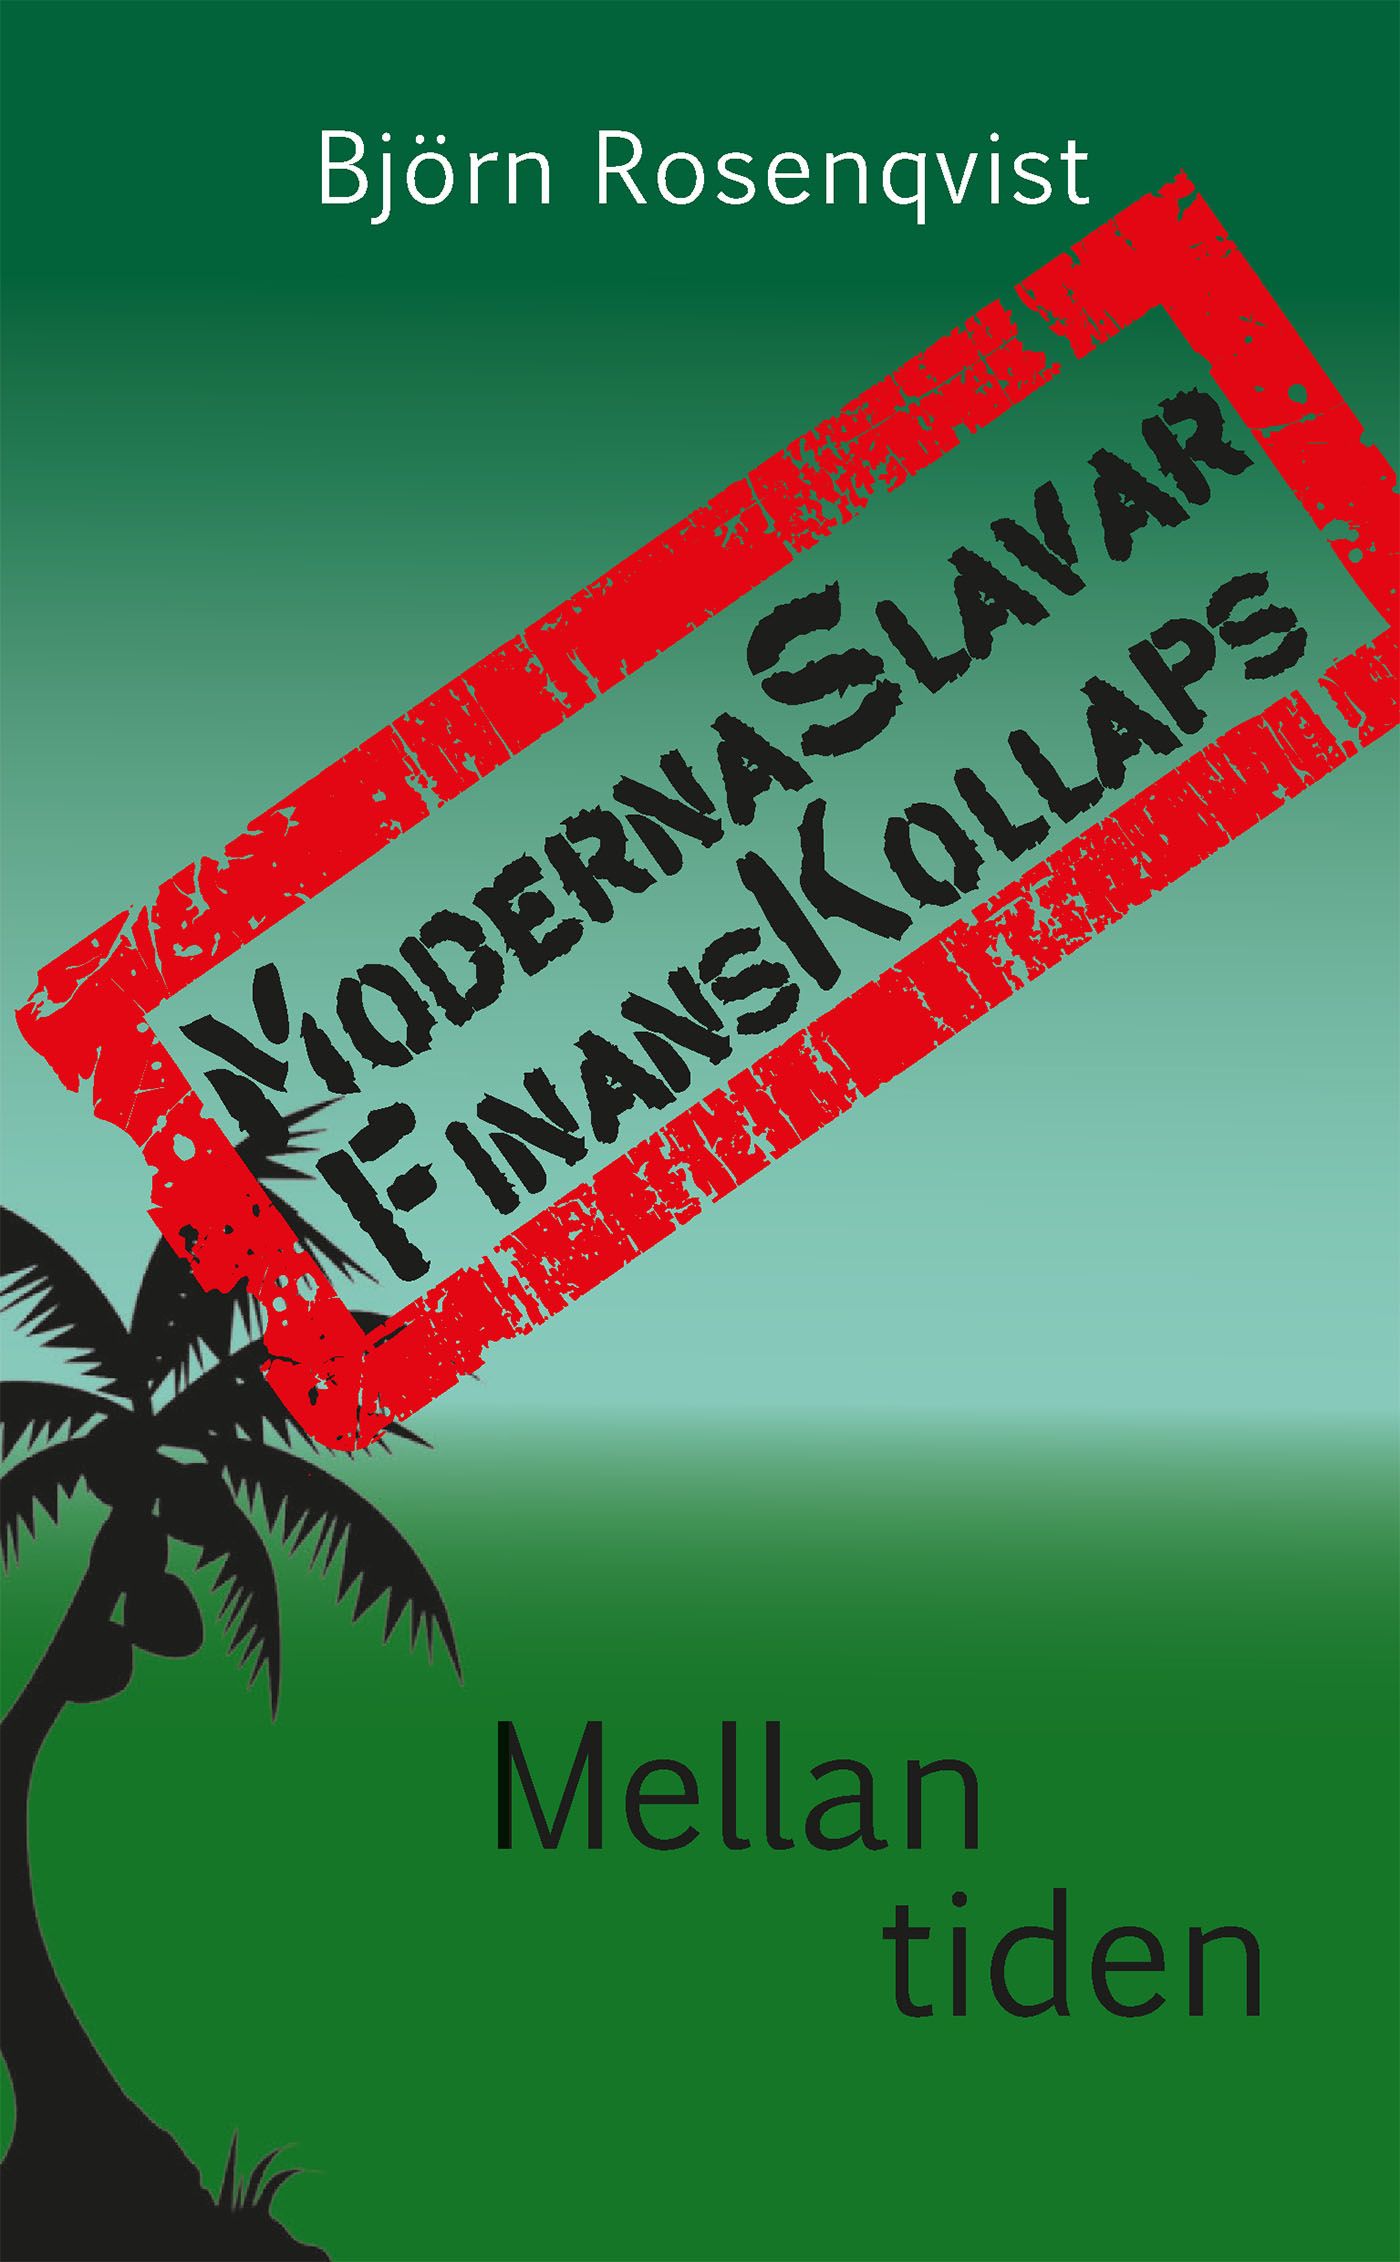 Moderna Slavar - FinansKollaps, andra upplagan, e-bok av Björn Rosenqvist